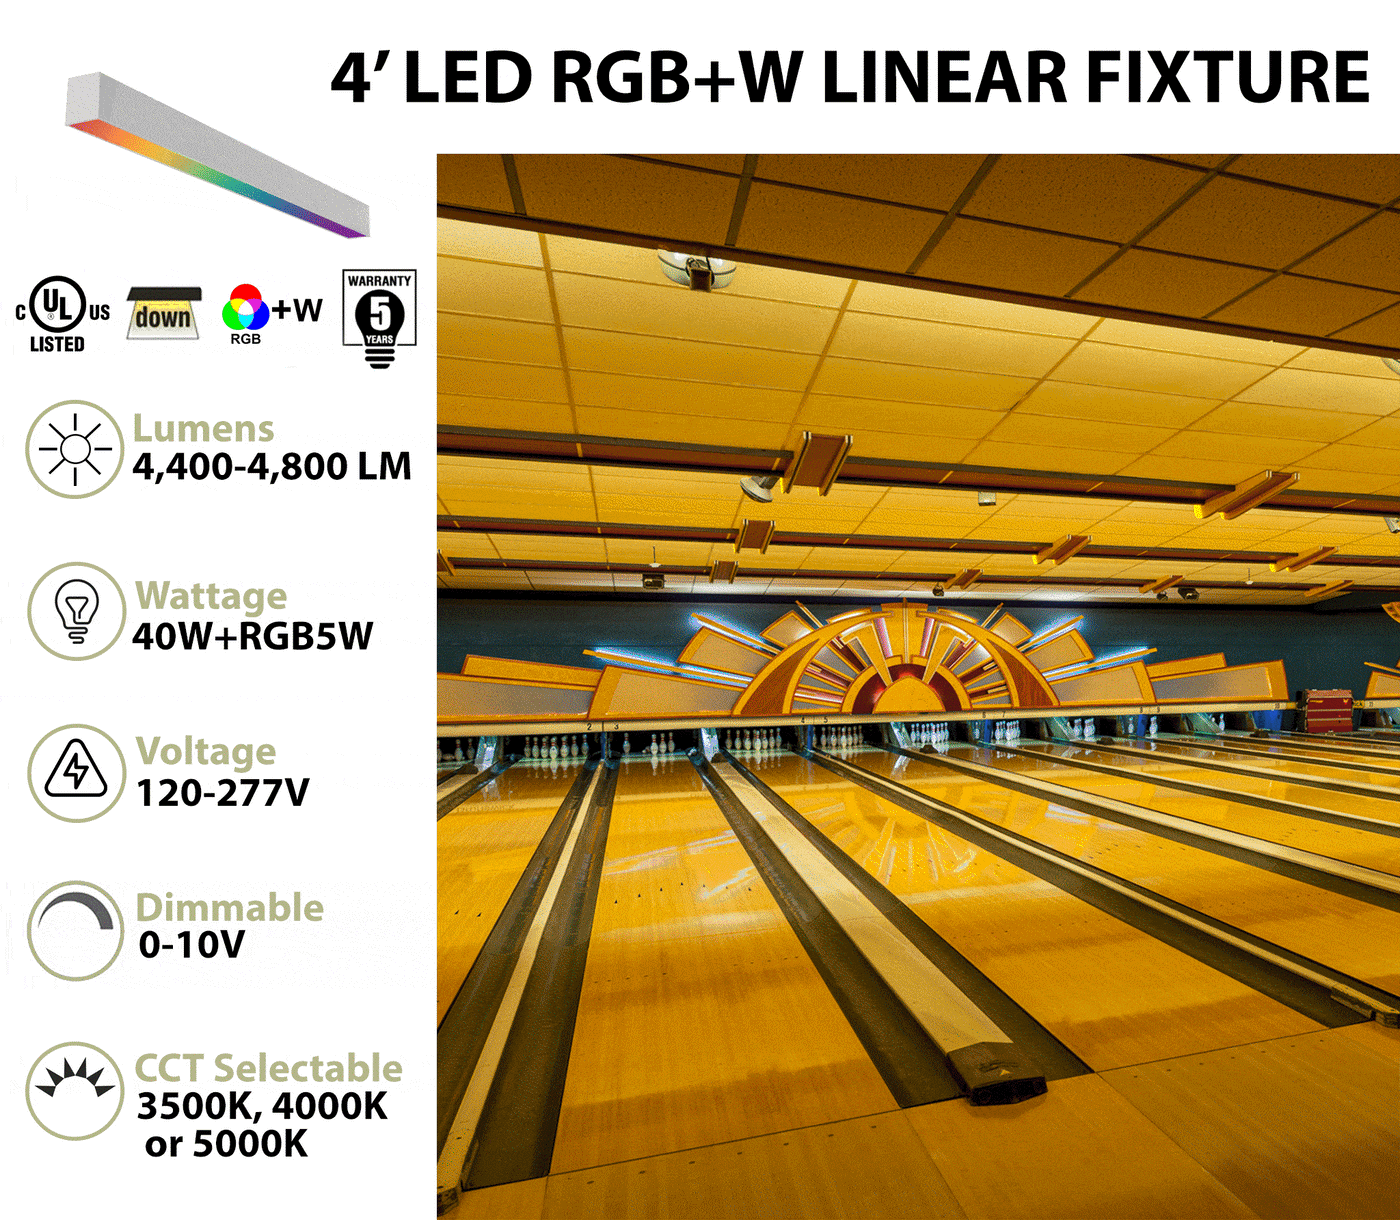 4FT LED RGBW Linear Fixture, 4800 Lumen Max, 40W, CCT Selectable, 120-277V, Black or White Finish